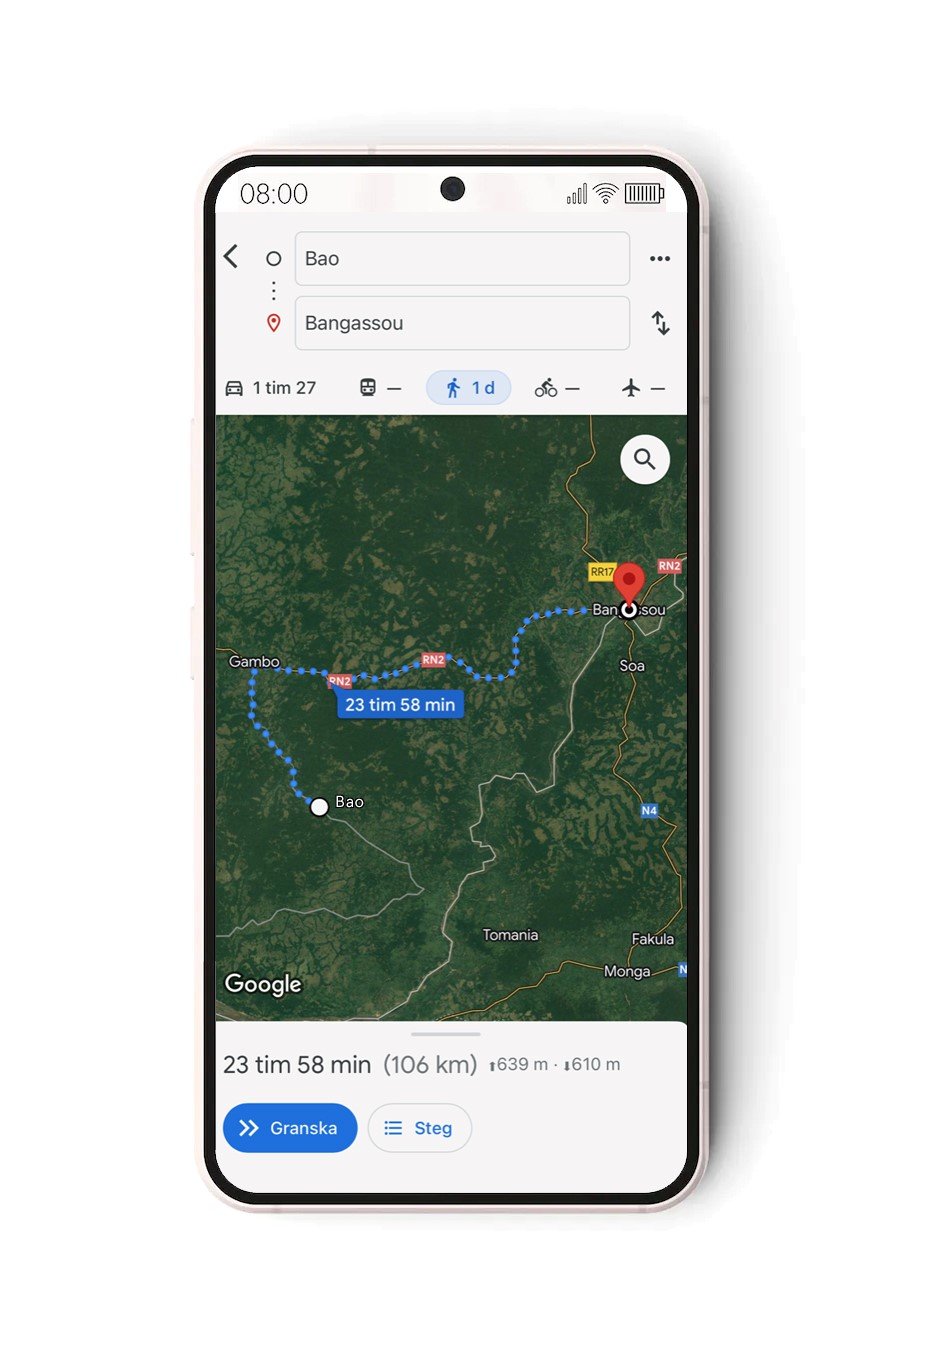 En mobil som visar avstånd på Google maps.